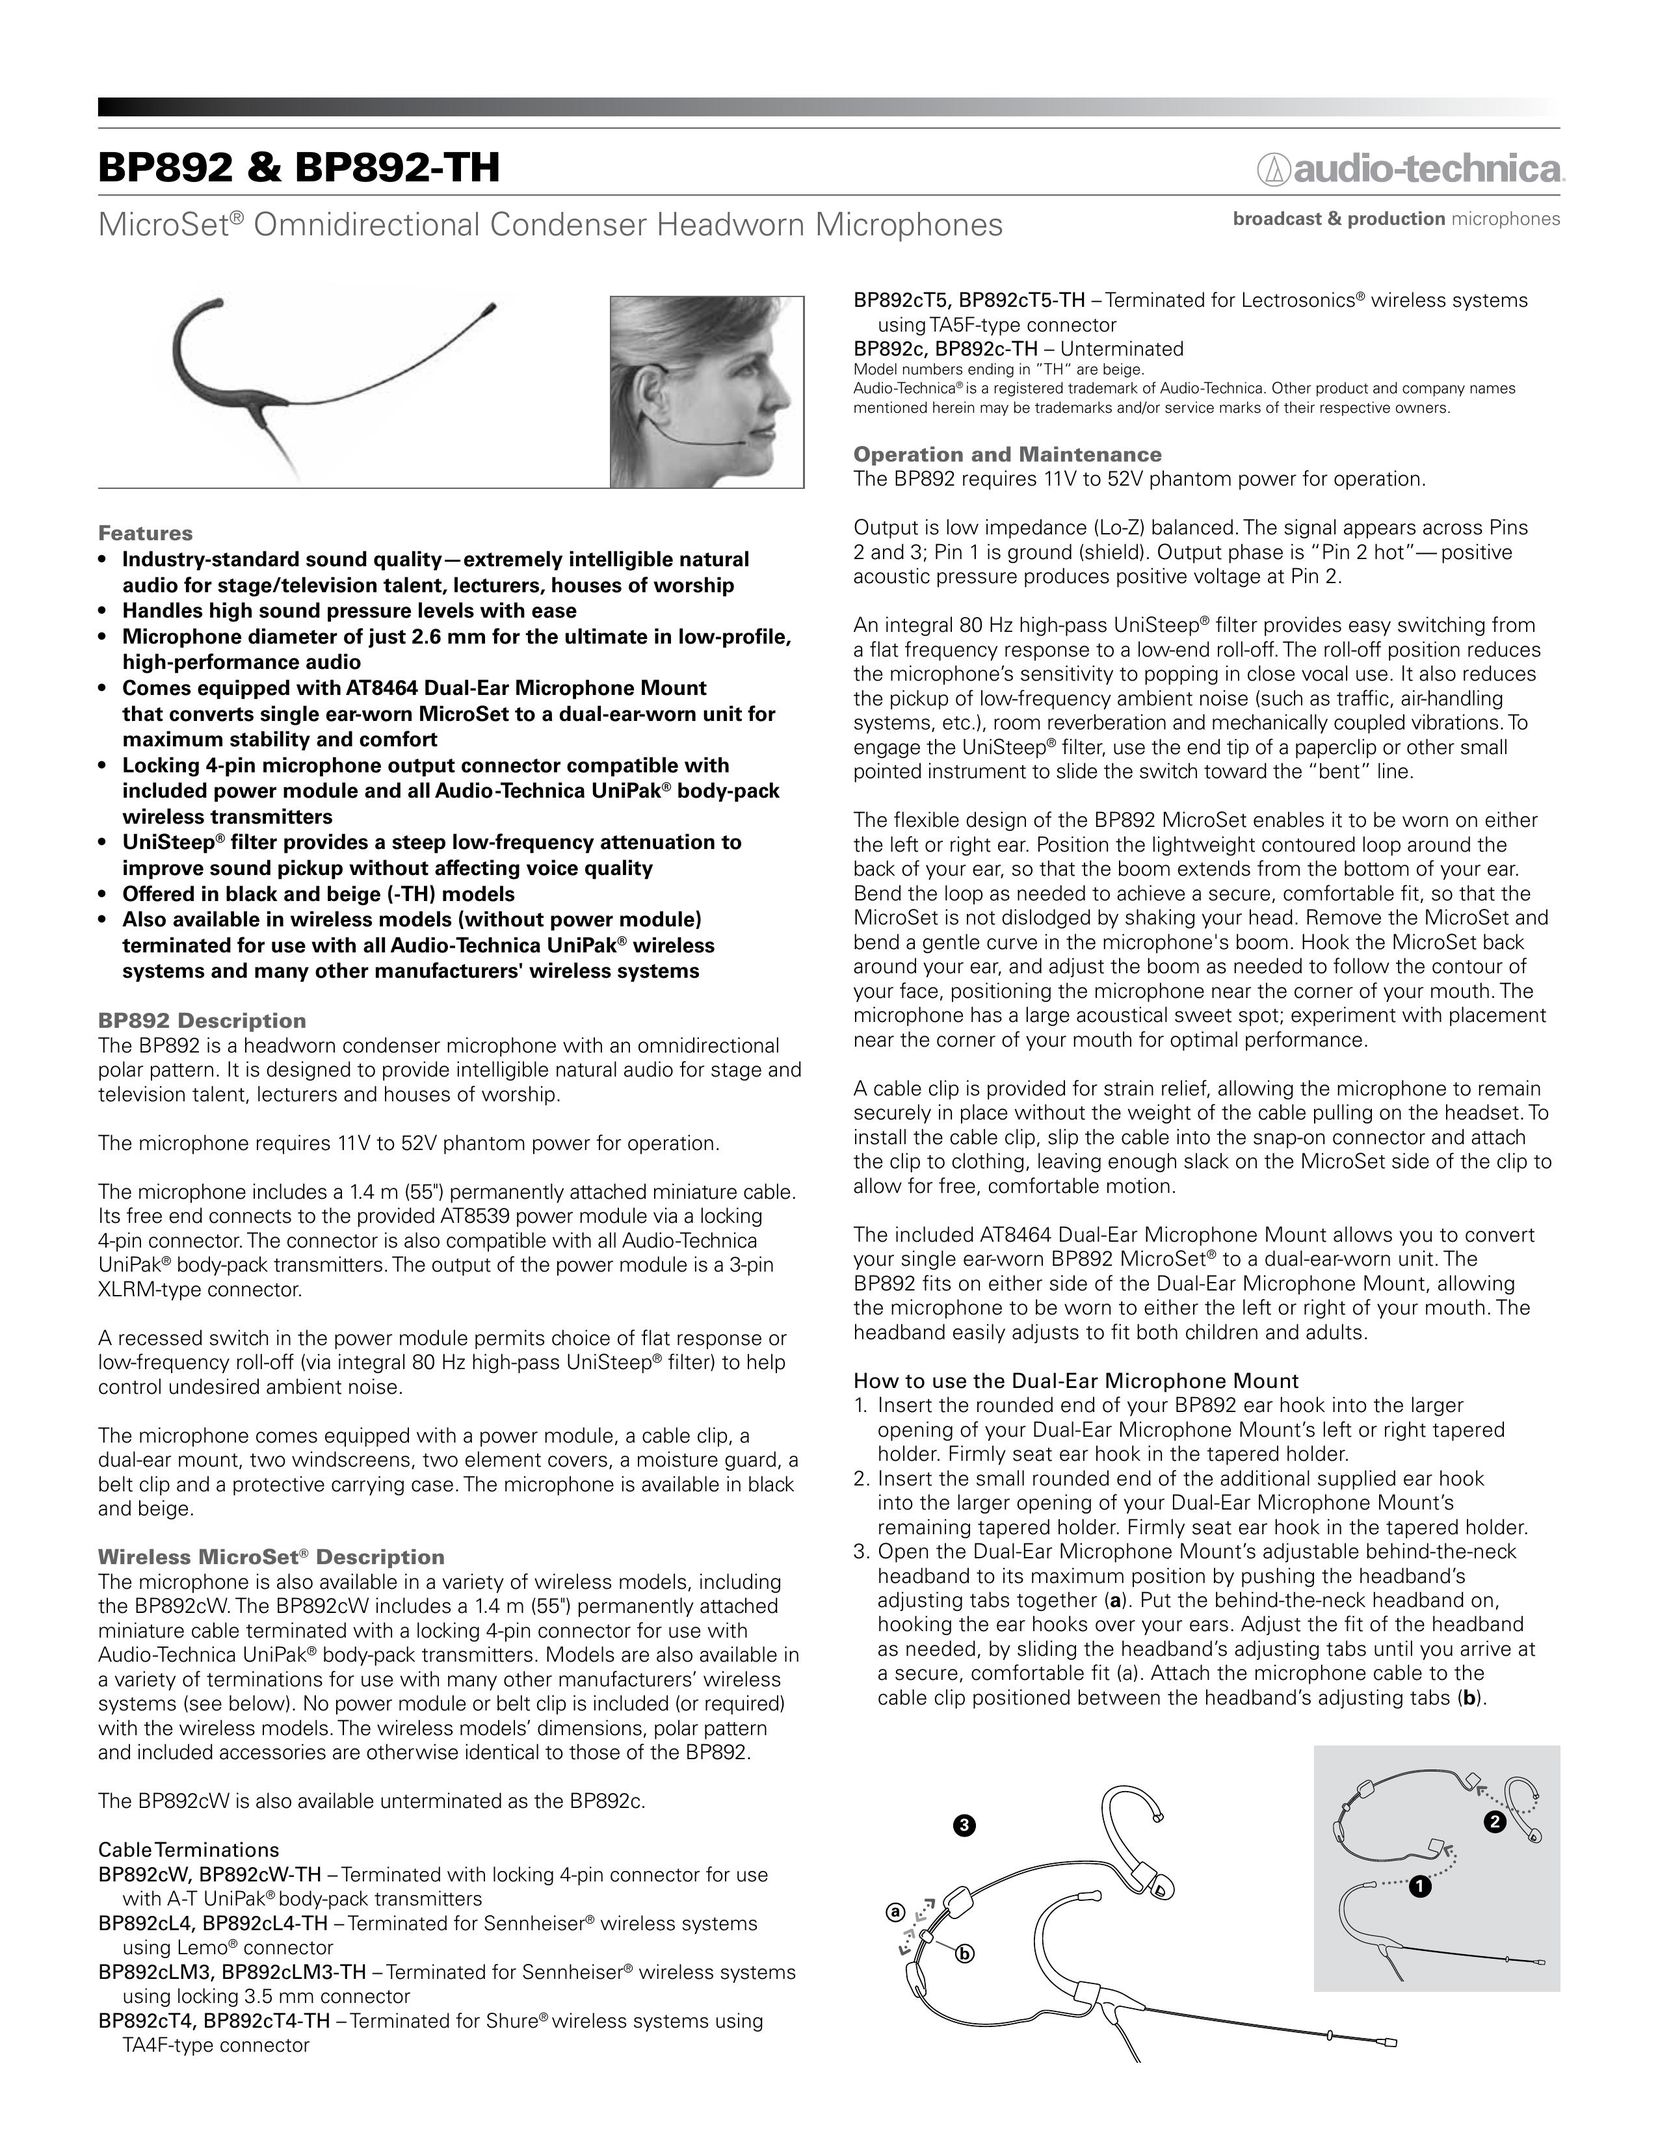 Audio-Technica BP892-TH Headphones User Manual